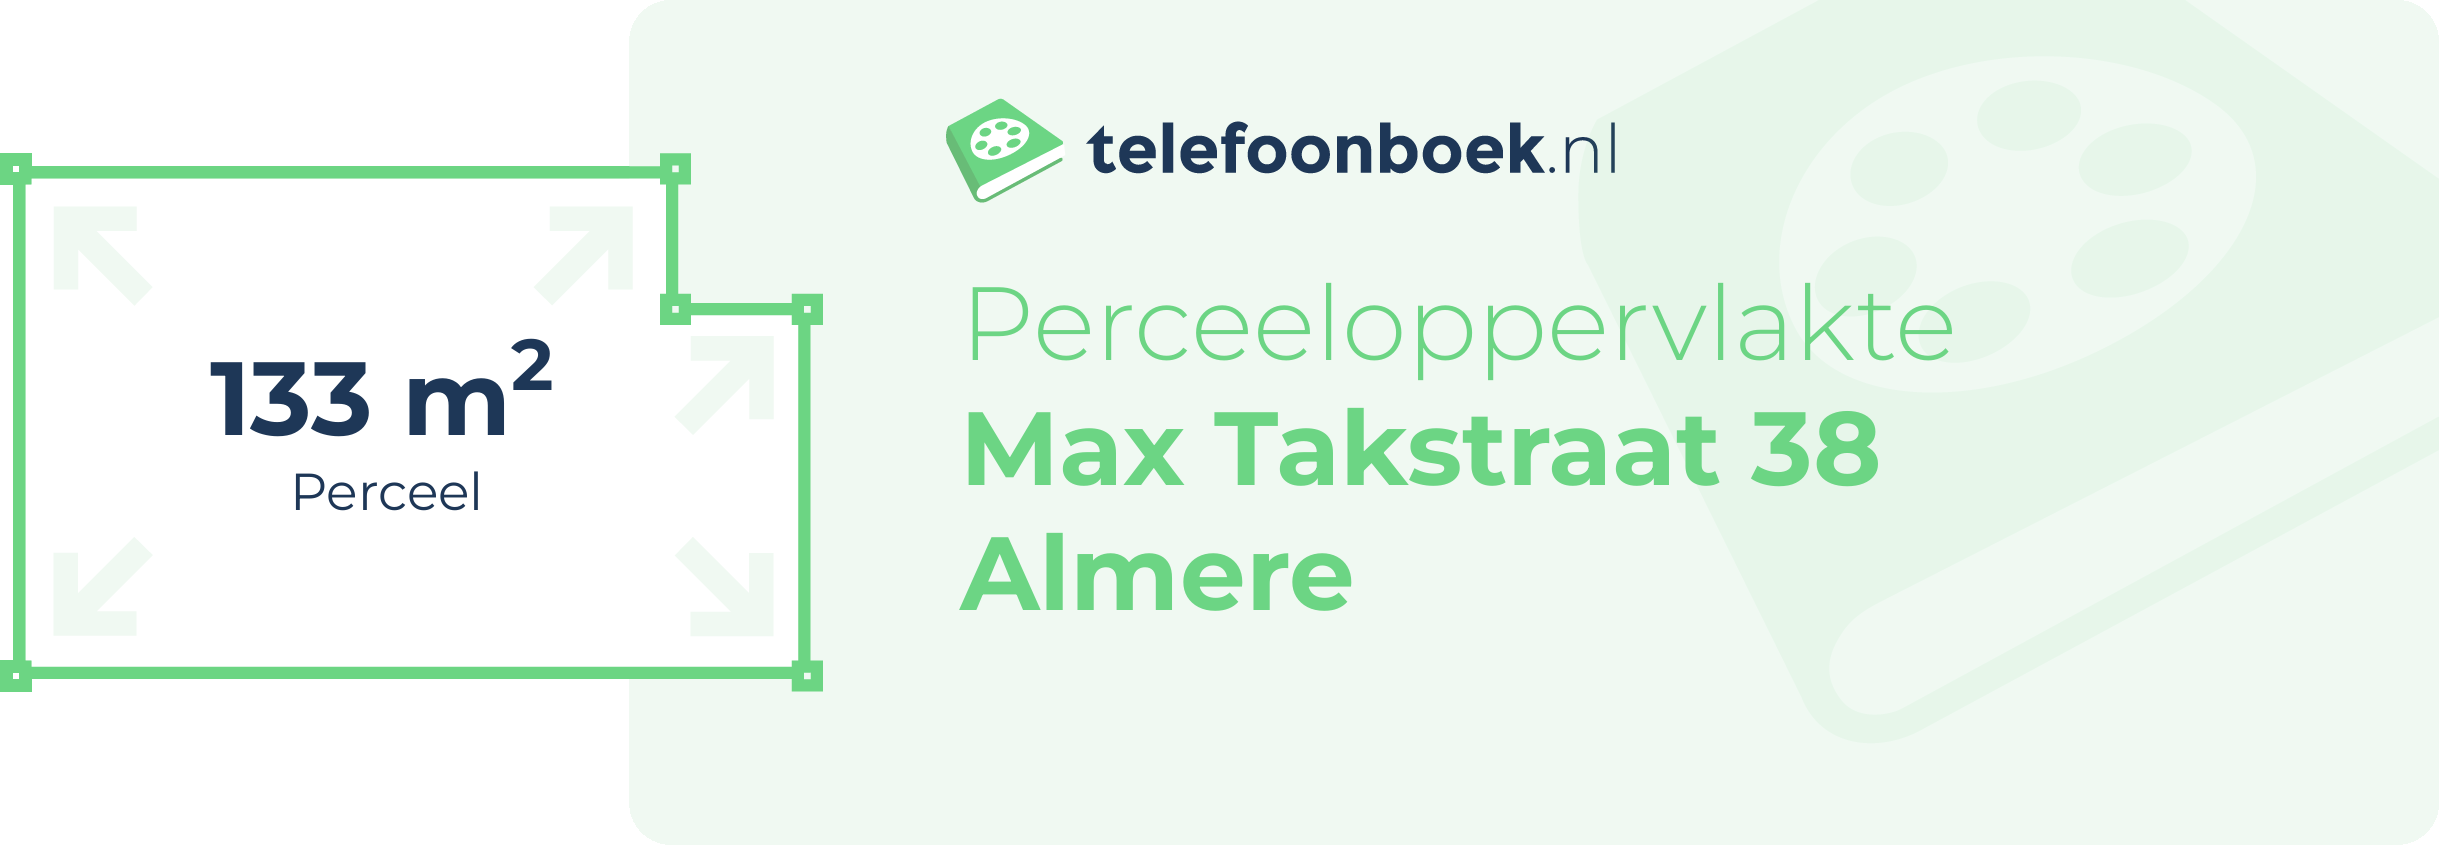 Perceeloppervlakte Max Takstraat 38 Almere